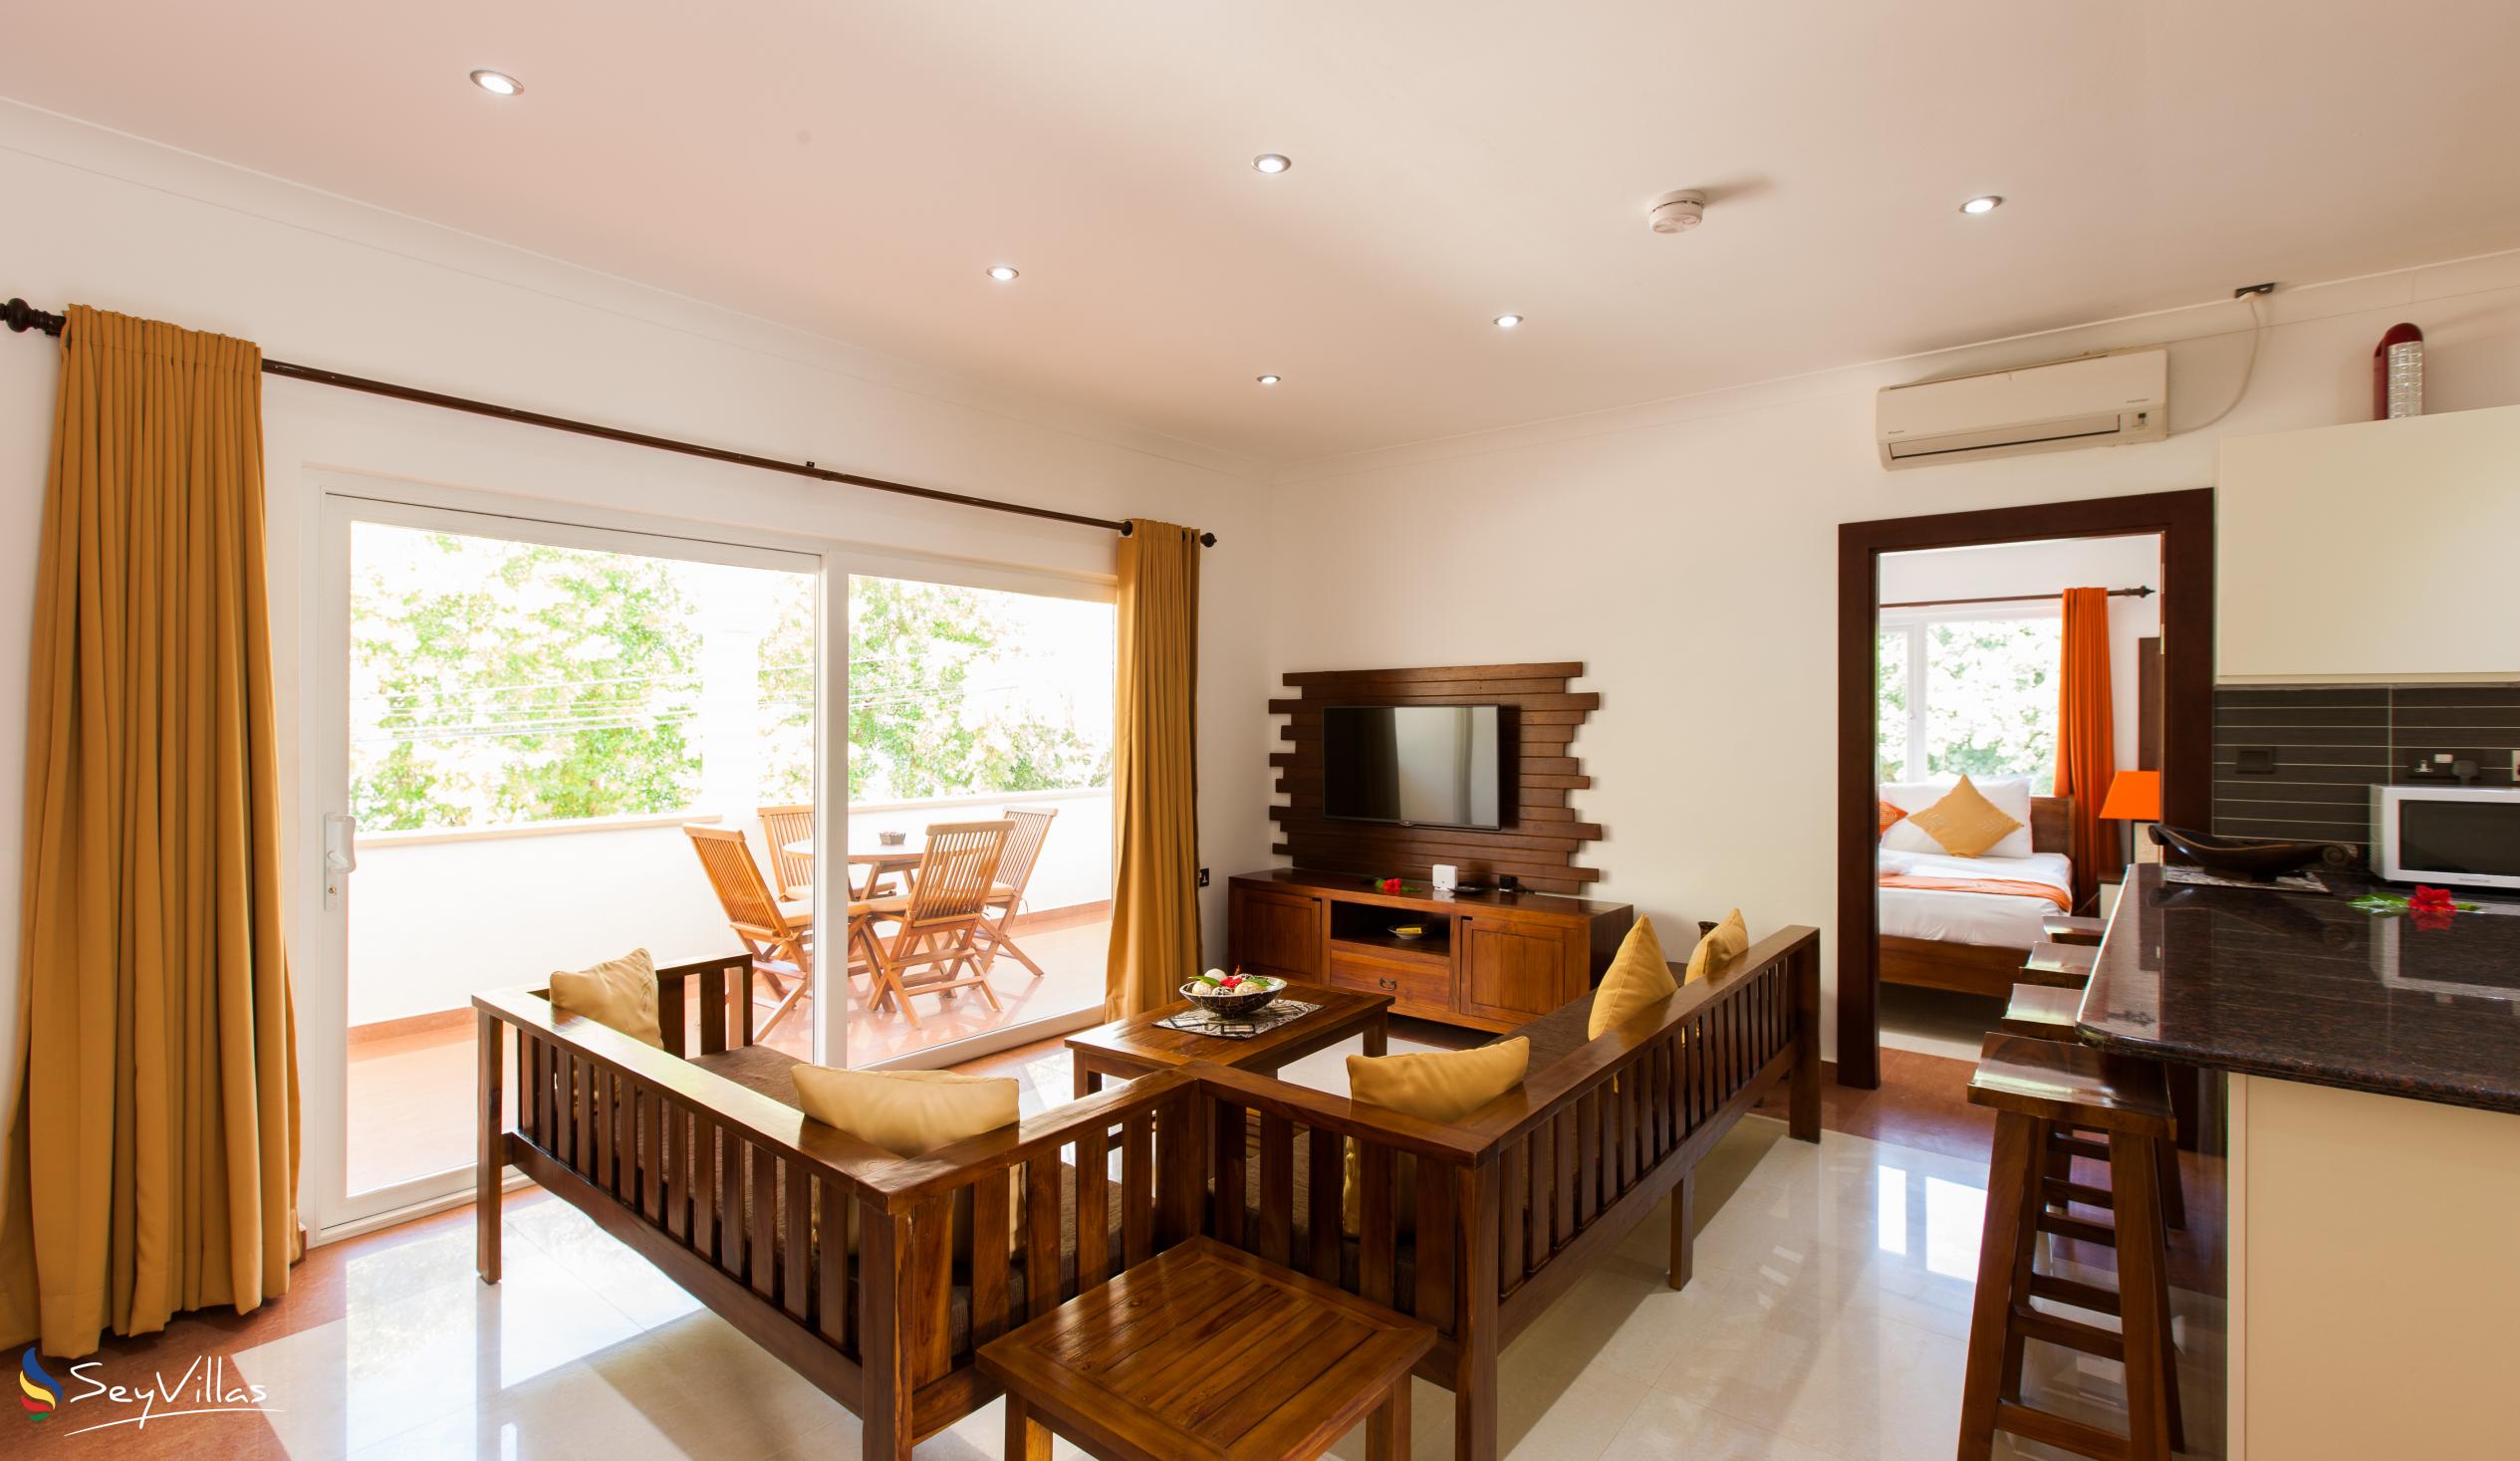 Foto 12: YASAD Luxury Beach Residence - Appartement 3 chambres - Praslin (Seychelles)